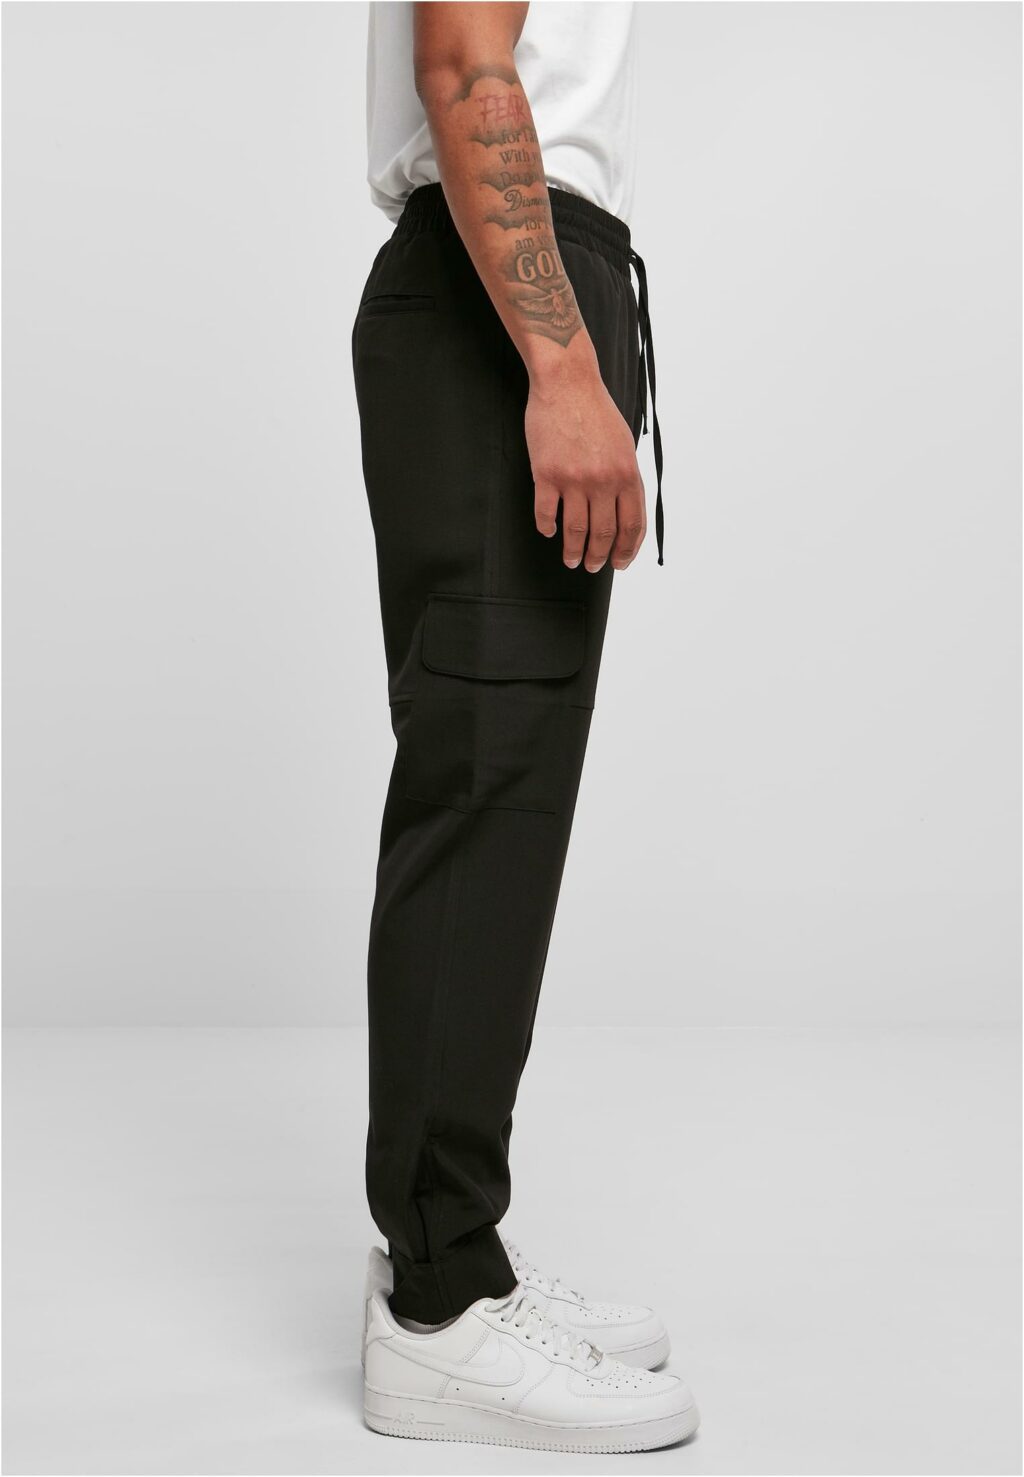 Urban Classics Comfort Military Pants black TB5583